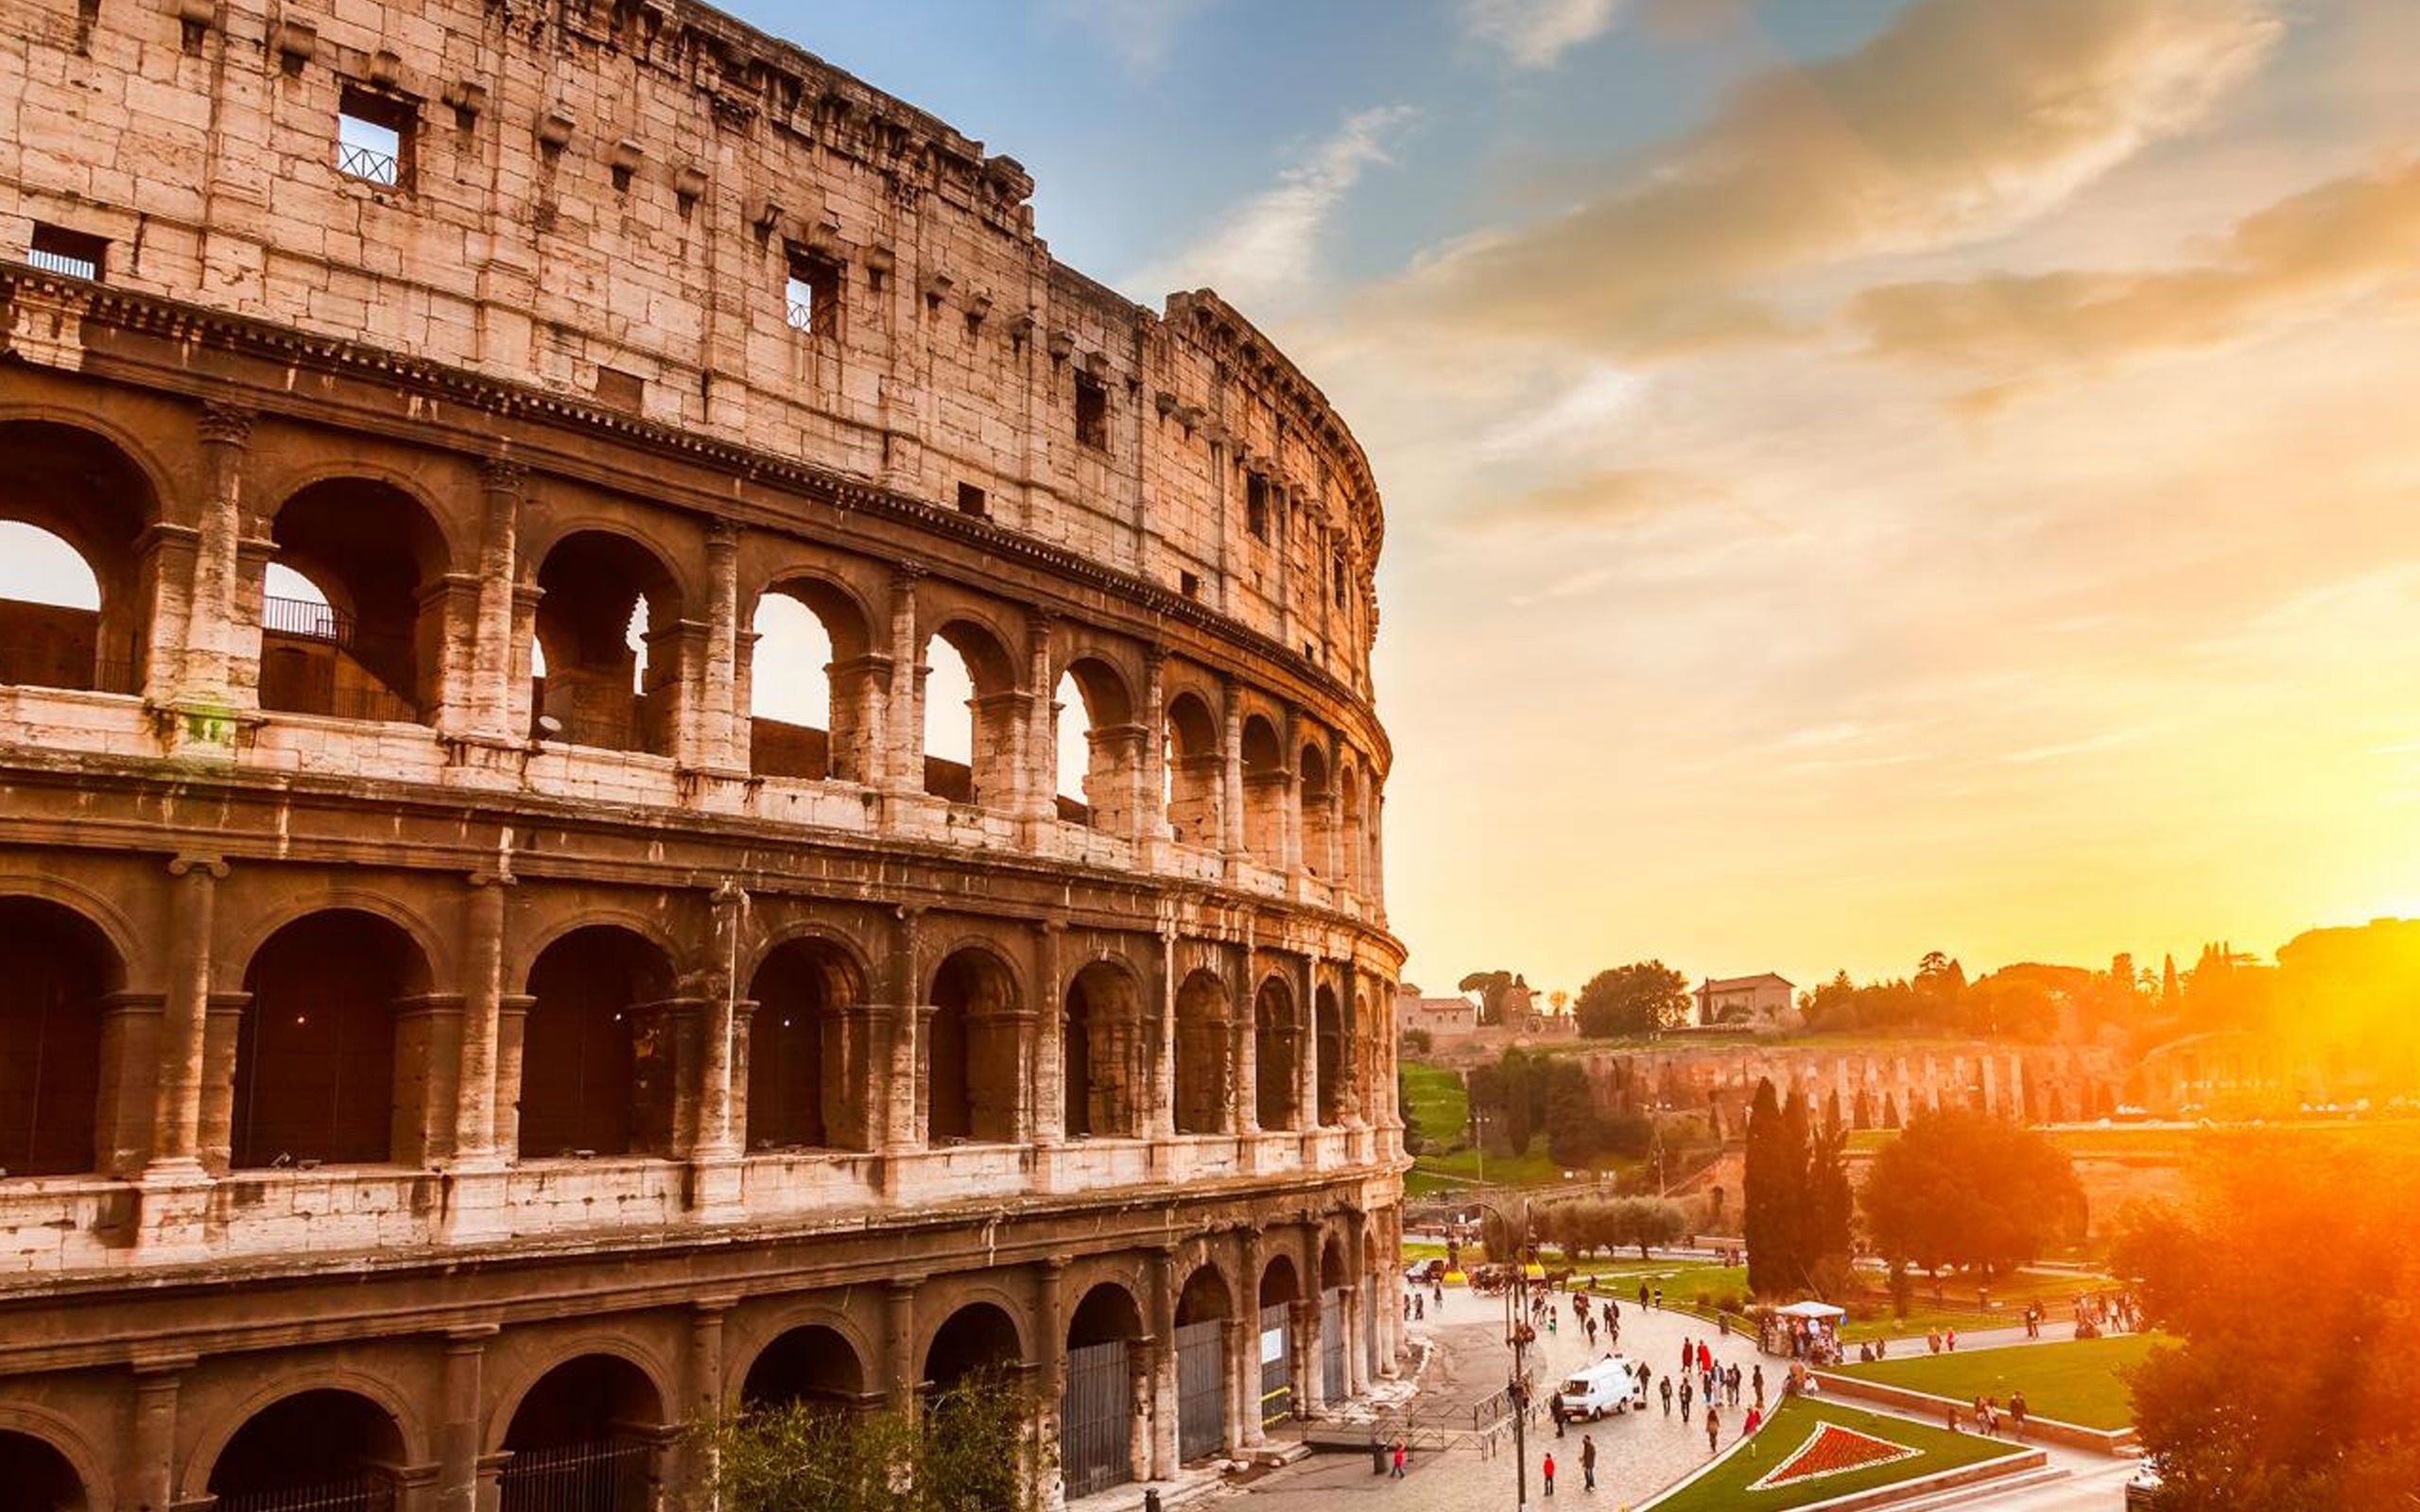 Colosseum architecture, HD desktop wallpaper, Roman marvel, Architectural beauty, 2560x1600 HD Desktop